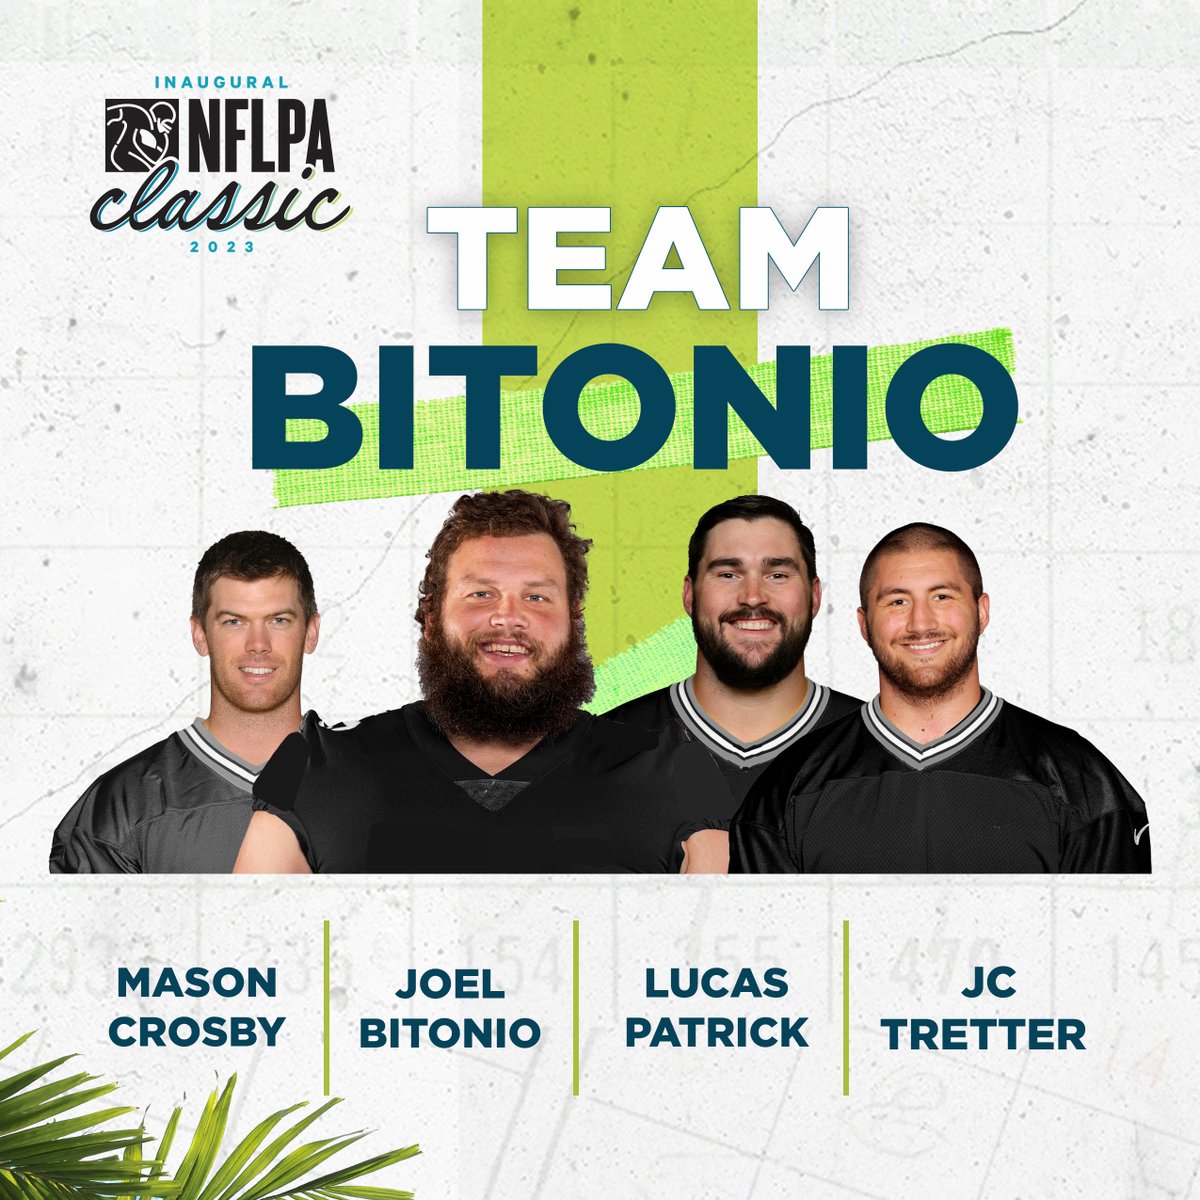 Time to meet the teams for the #NFLPAClassic ⛳️ TEAM BITONIO: @JoelBitonio @lucaspatrick62 @JCTretter @crosbykicks2